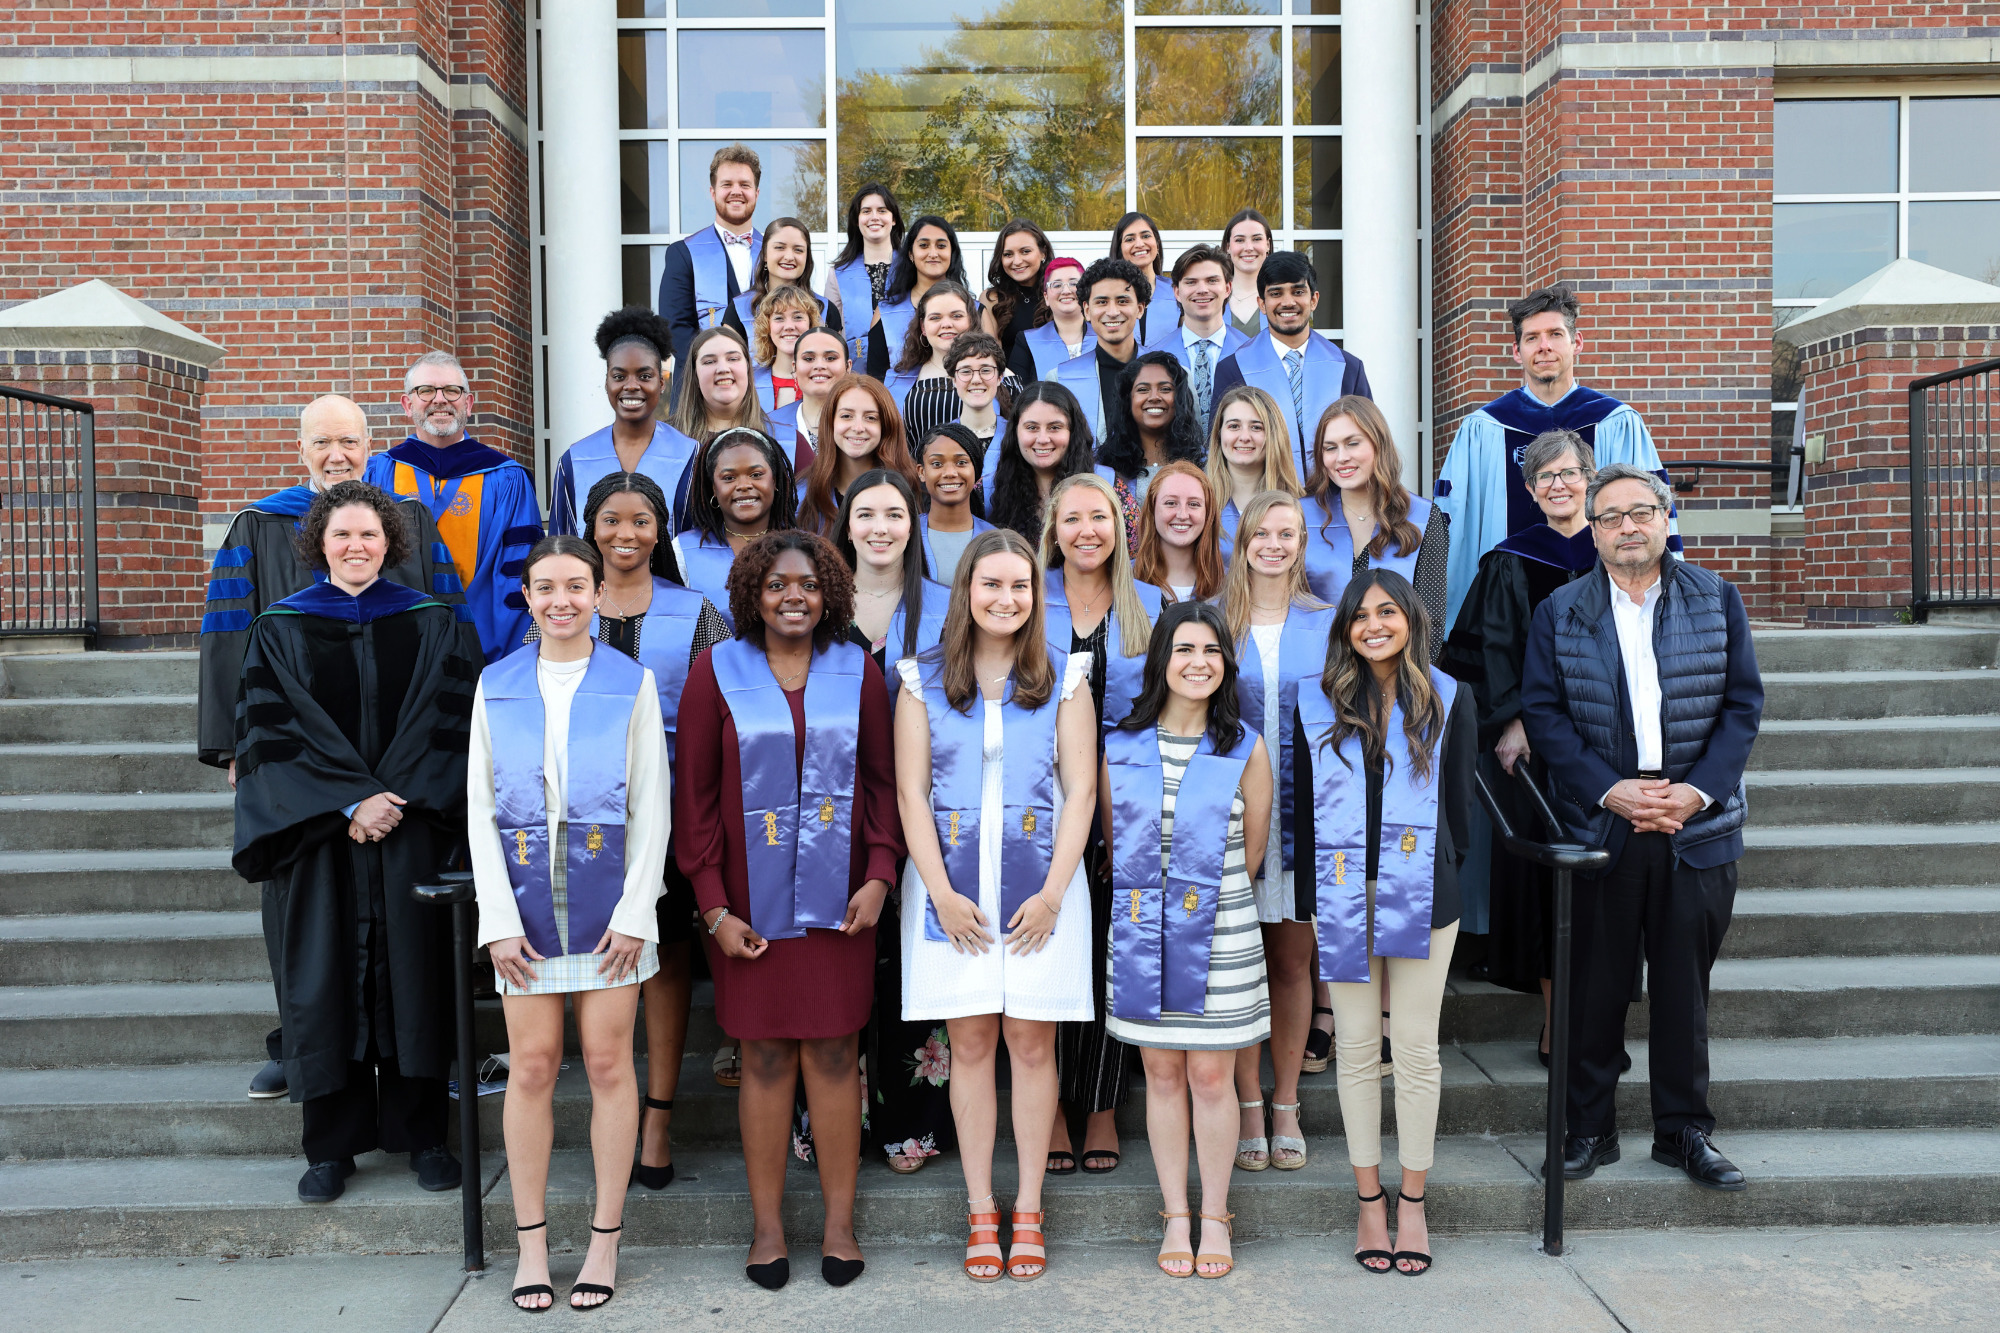 inducts 41 students into Phi Beta Kappa Society